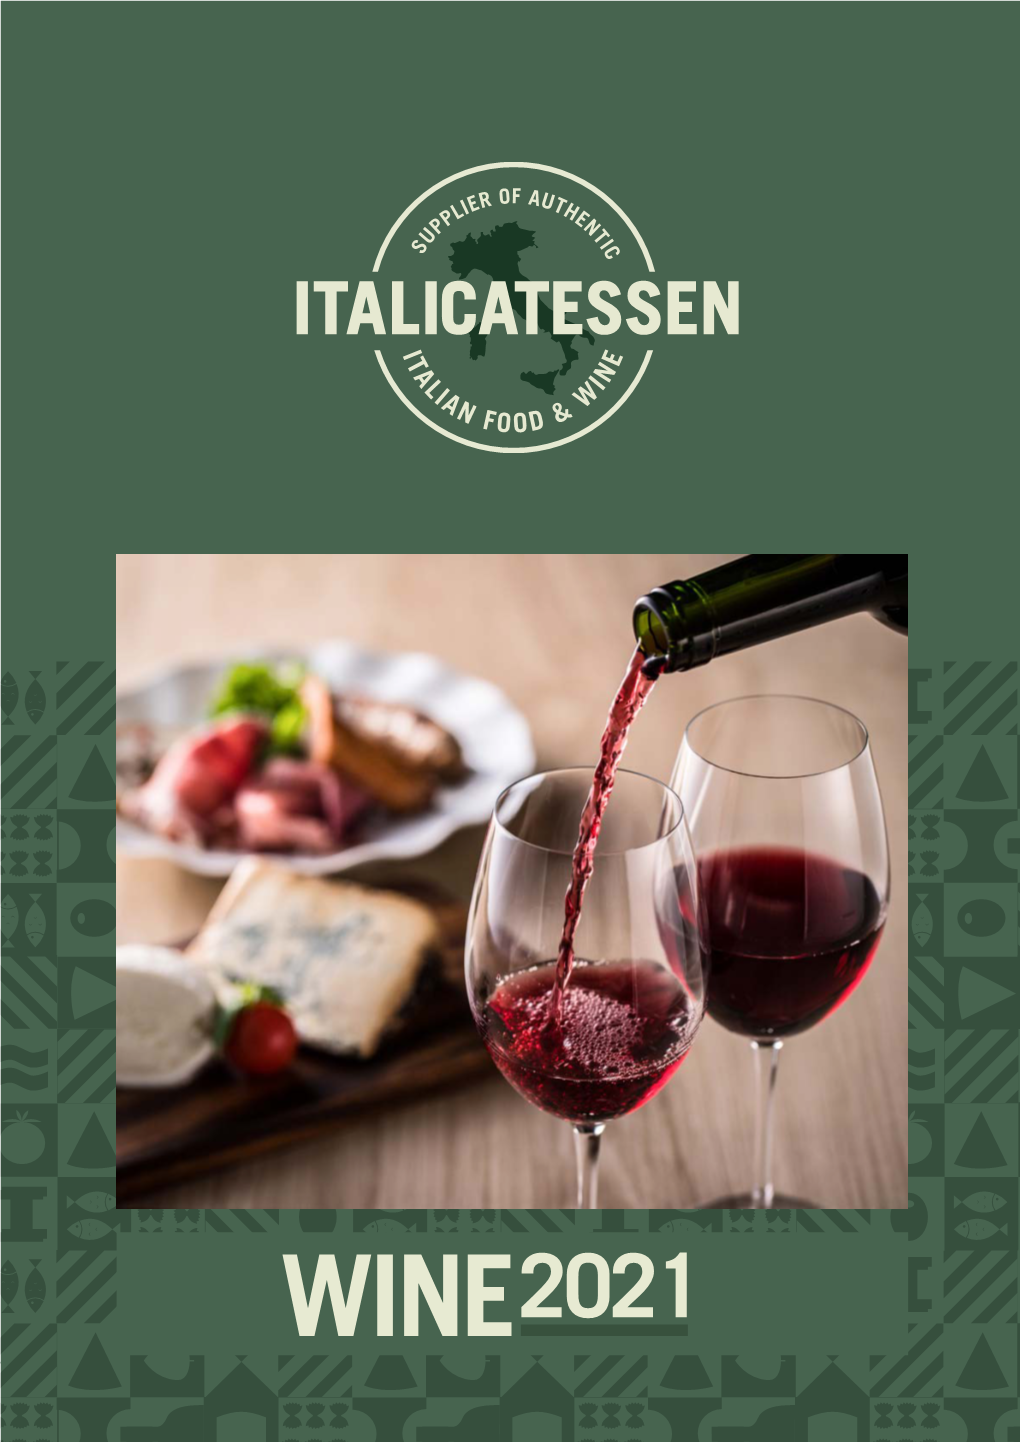 Wine2021 Italicatessen Wine Catalogue 2021 1 Contents